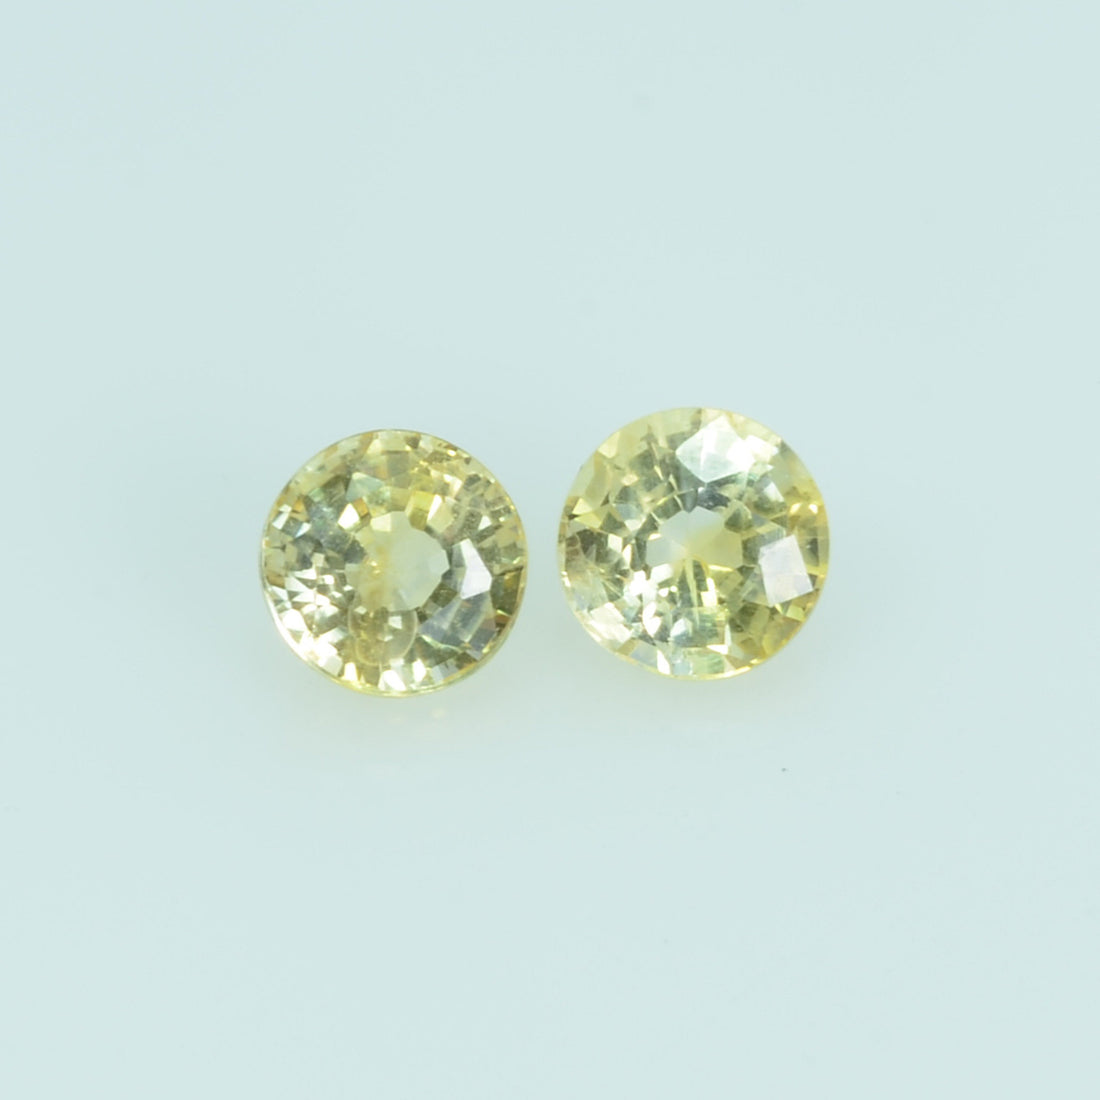 3.7 mm Natural Yellow Sapphire Loose Gemstone Round Cut - Thai Gems Export Ltd.